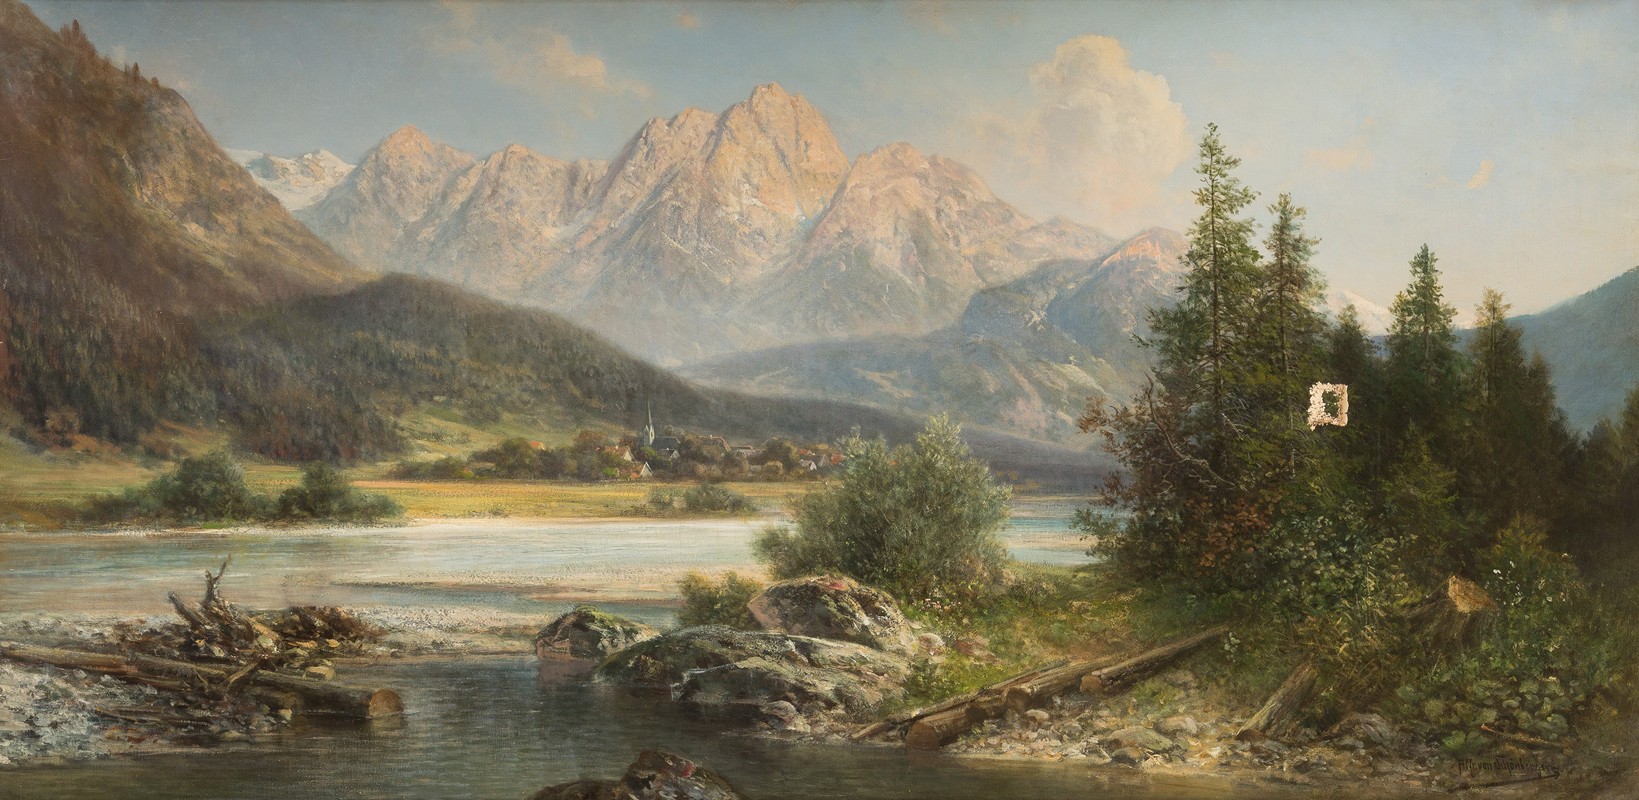 阿尔卑斯山脚下的河流景观`River landscape at the foot of the Alps by Alfred Karl Julius Von Schönberger